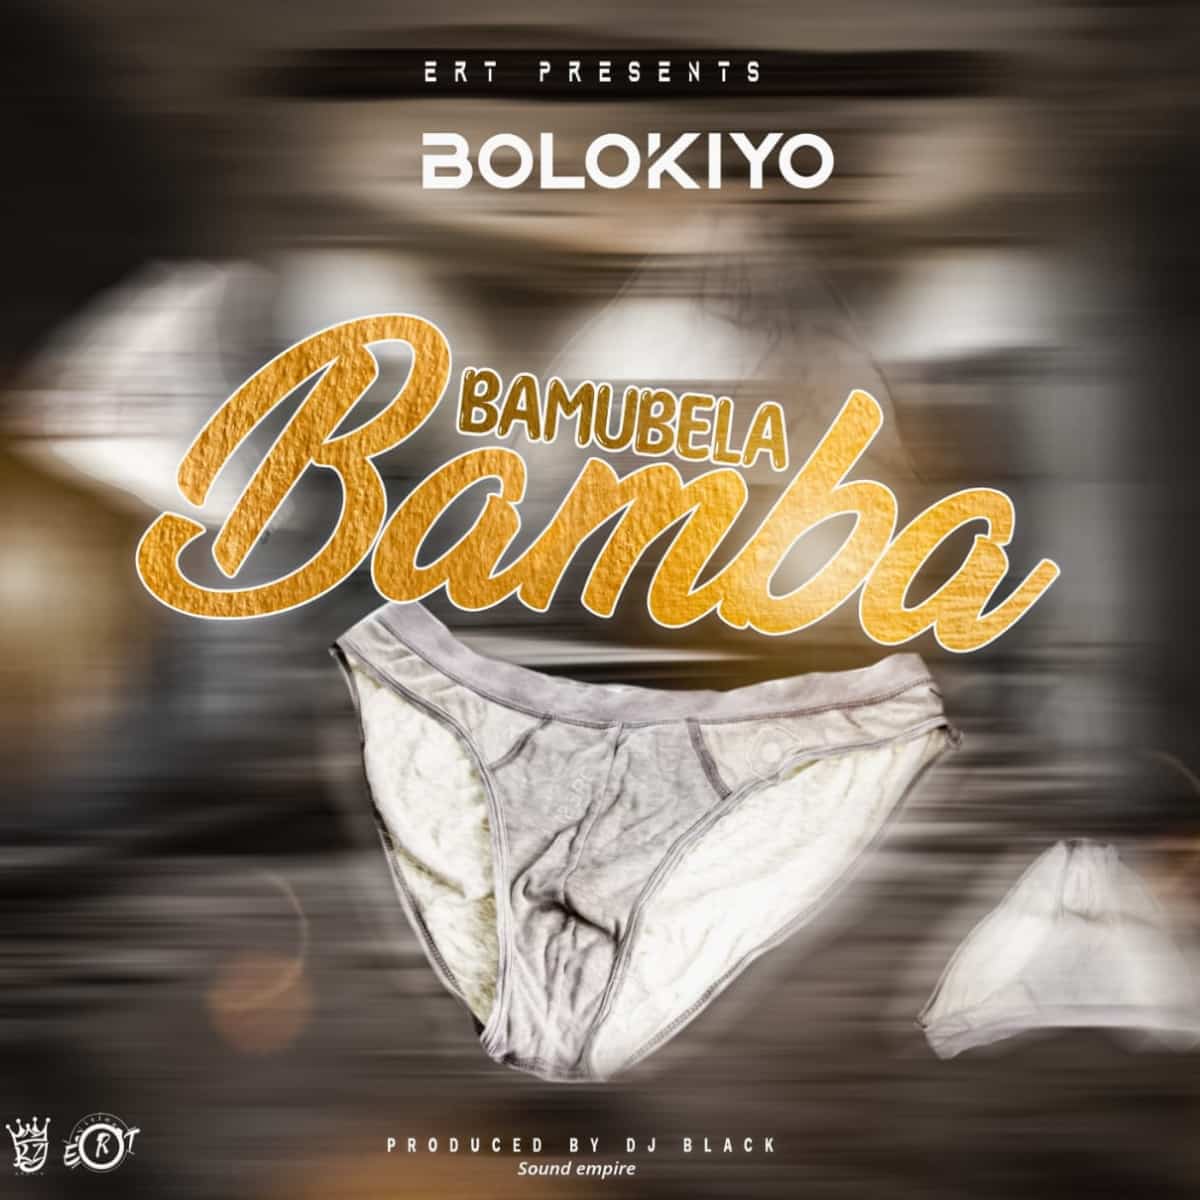 DOWNLOAD: Bolokiyo – “Bamubela Bamba” Mp3